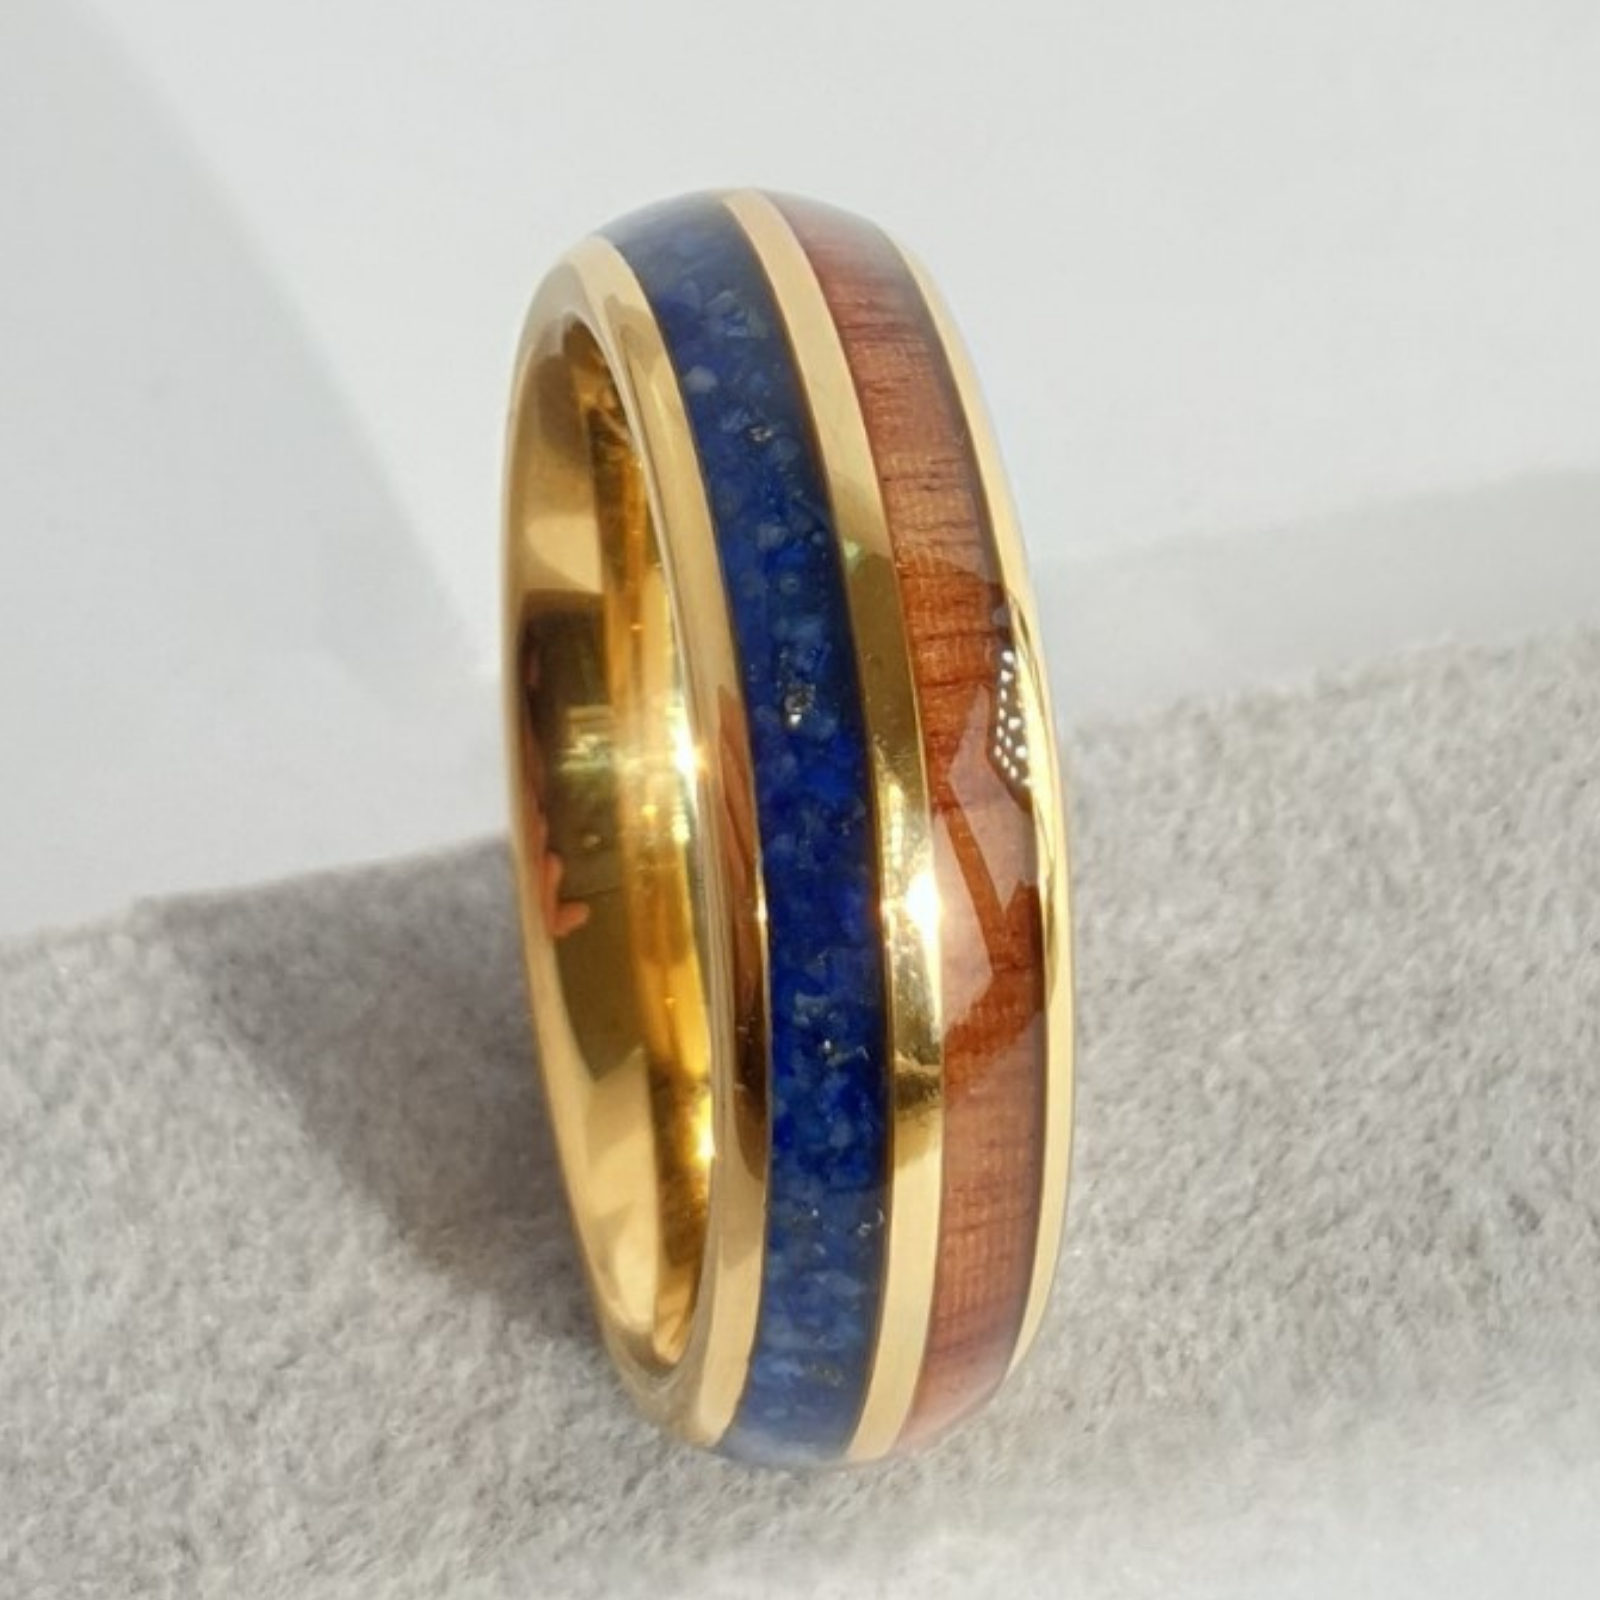 The Golden Blue 6mm Wonder Ring